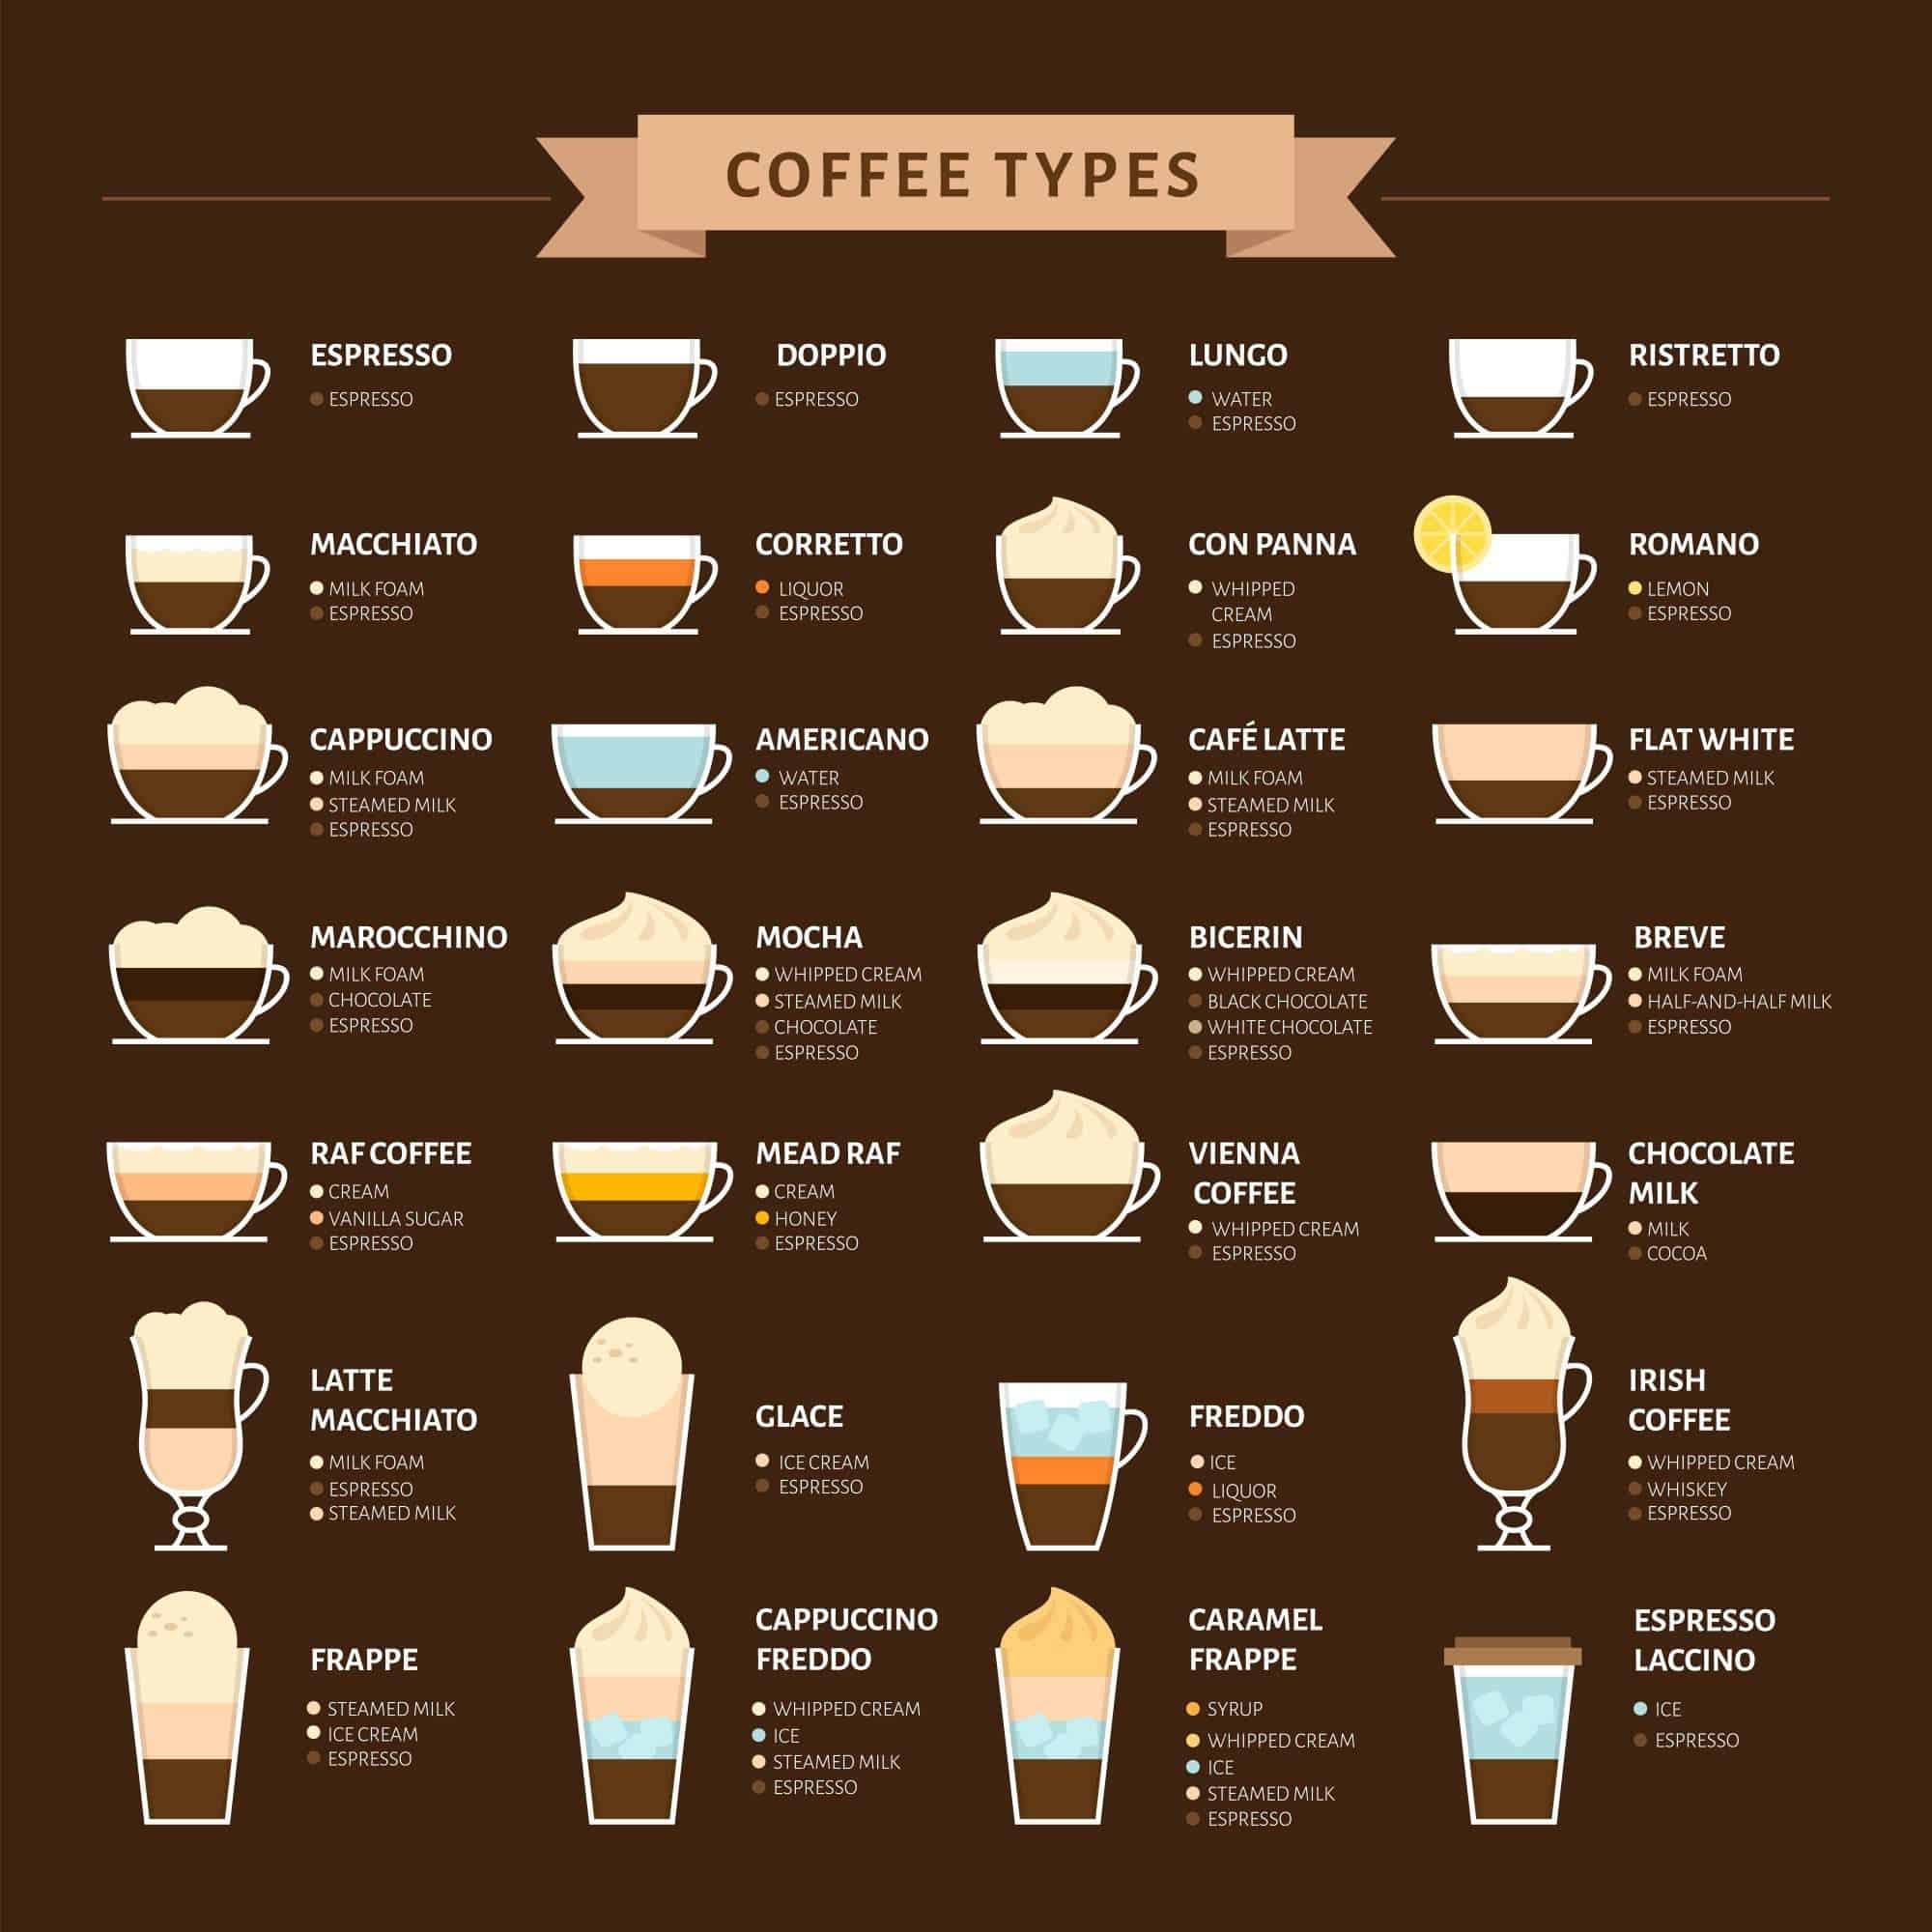 Кофе макиато: рецепт пятнистого или мраморного кофе